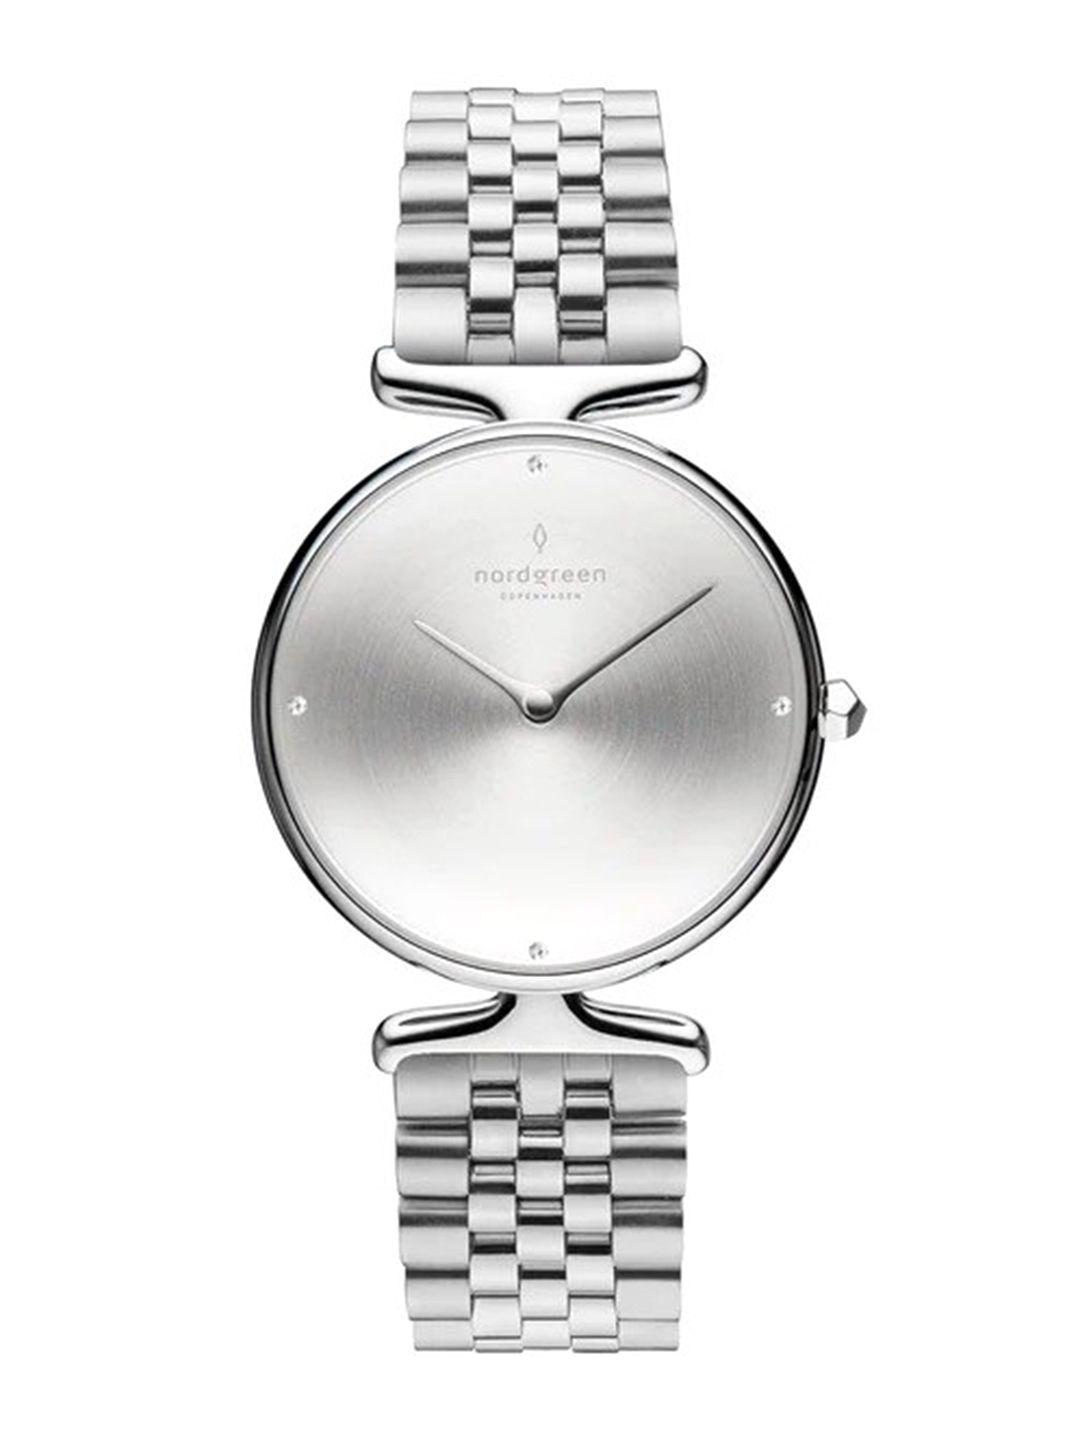 nordgreen-women-stainless-steel-bracelet-style-strap-analogue-watch-un28si5lsibc